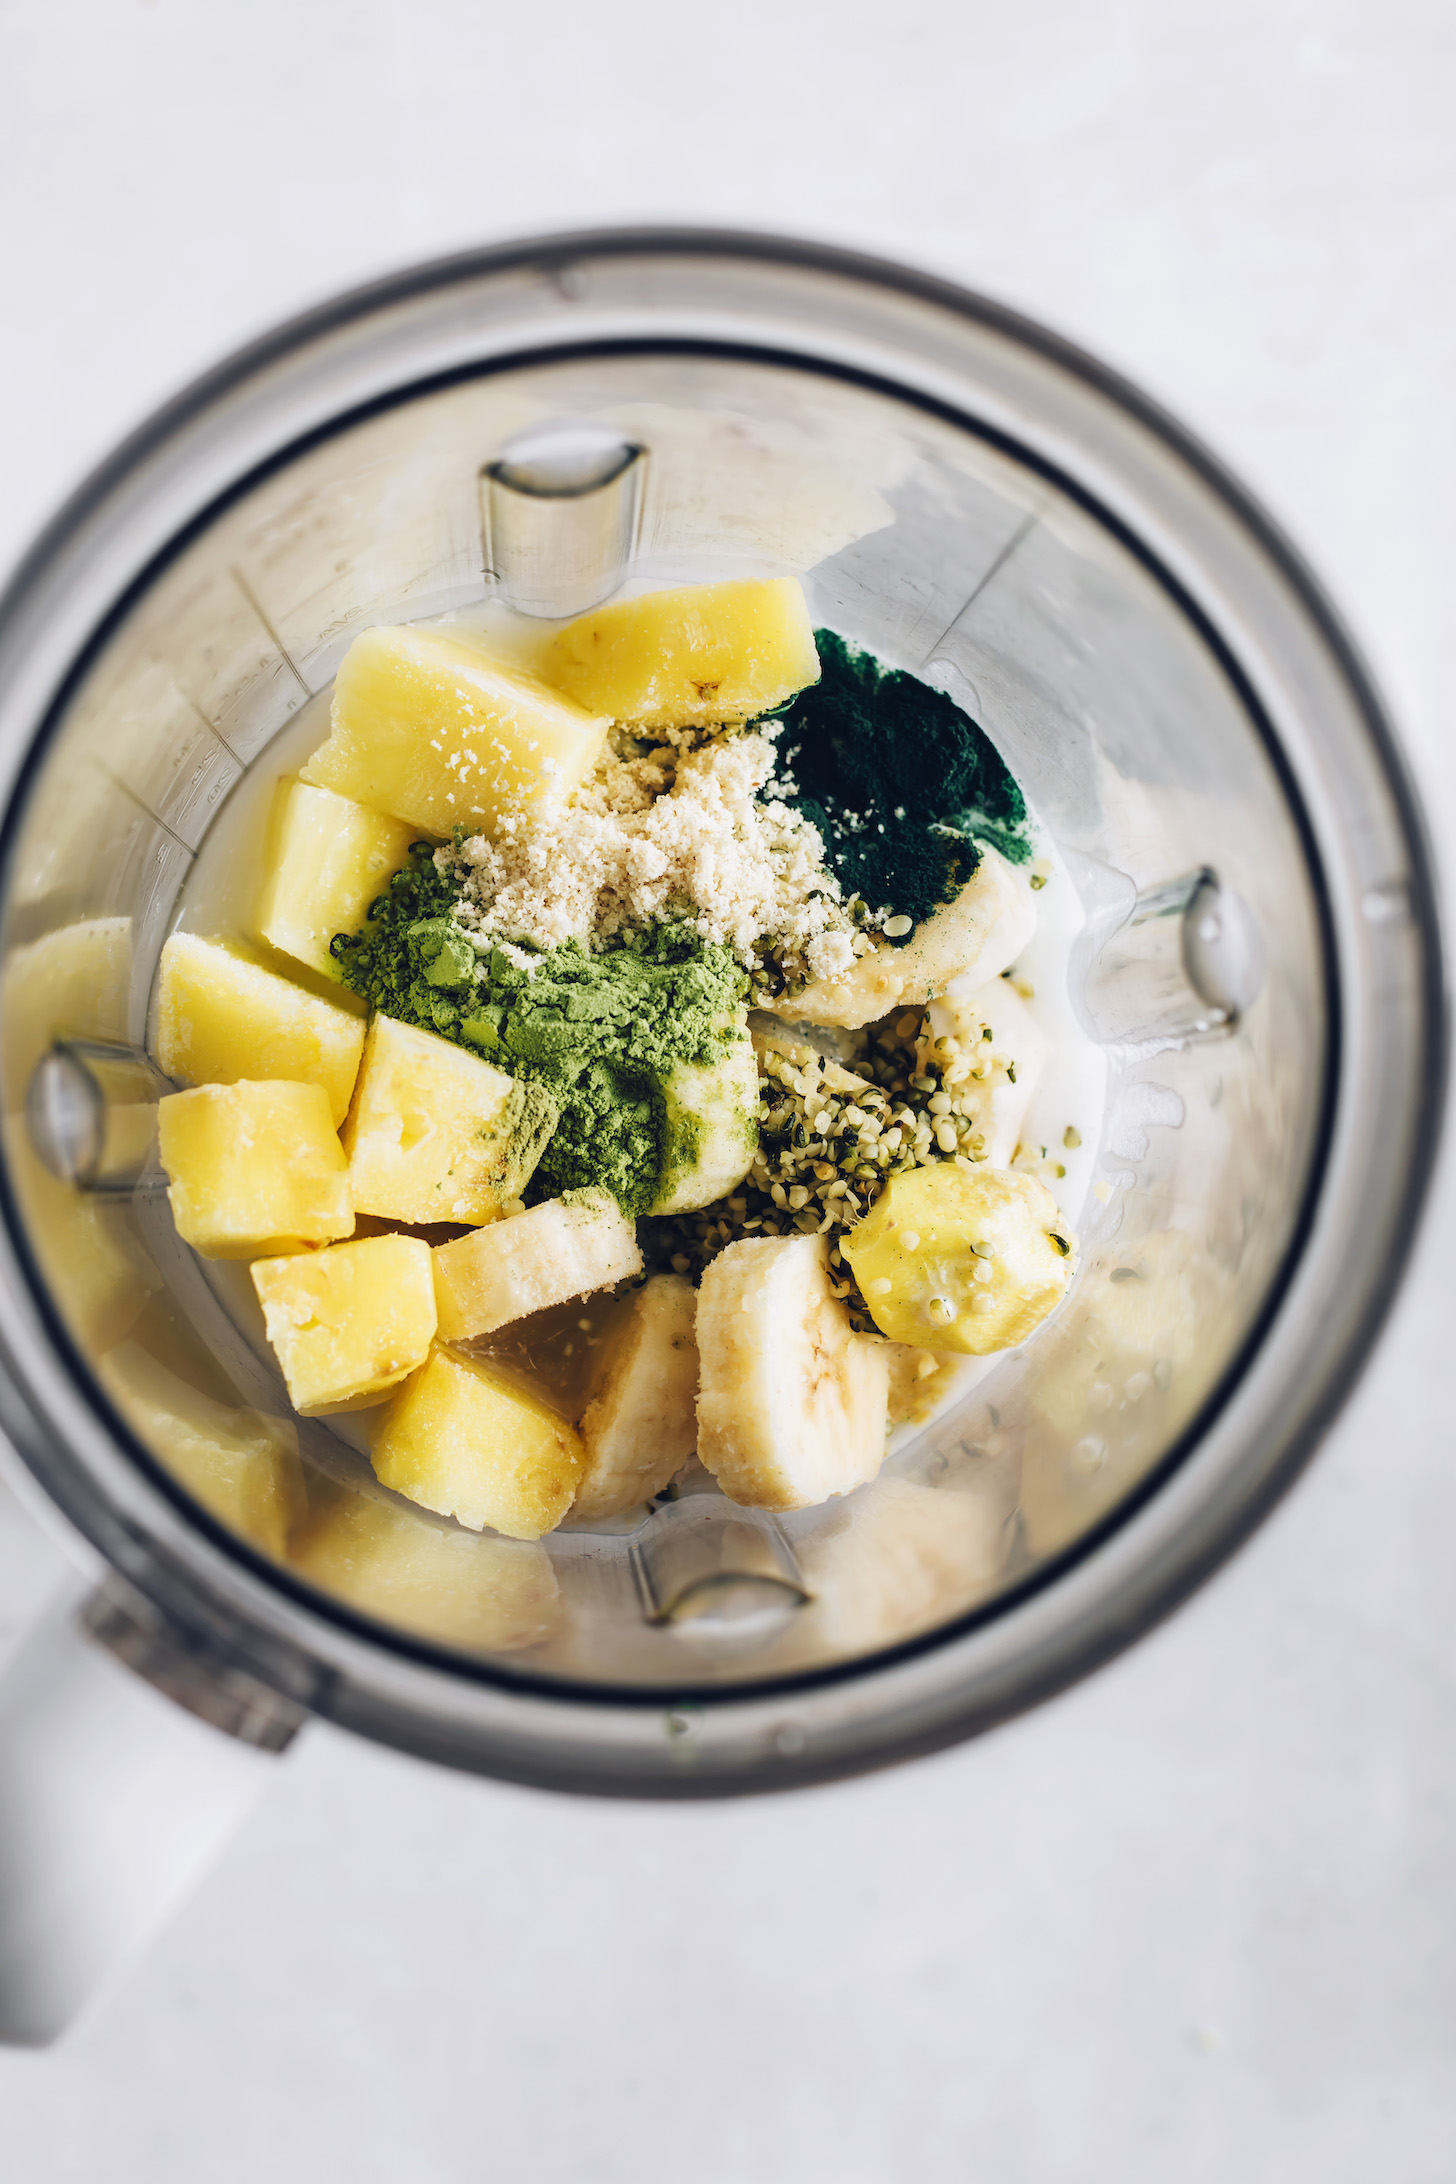 Frozen pineapple, banana, hemp seeds, dairy-free milk, and superfood powders in a blender